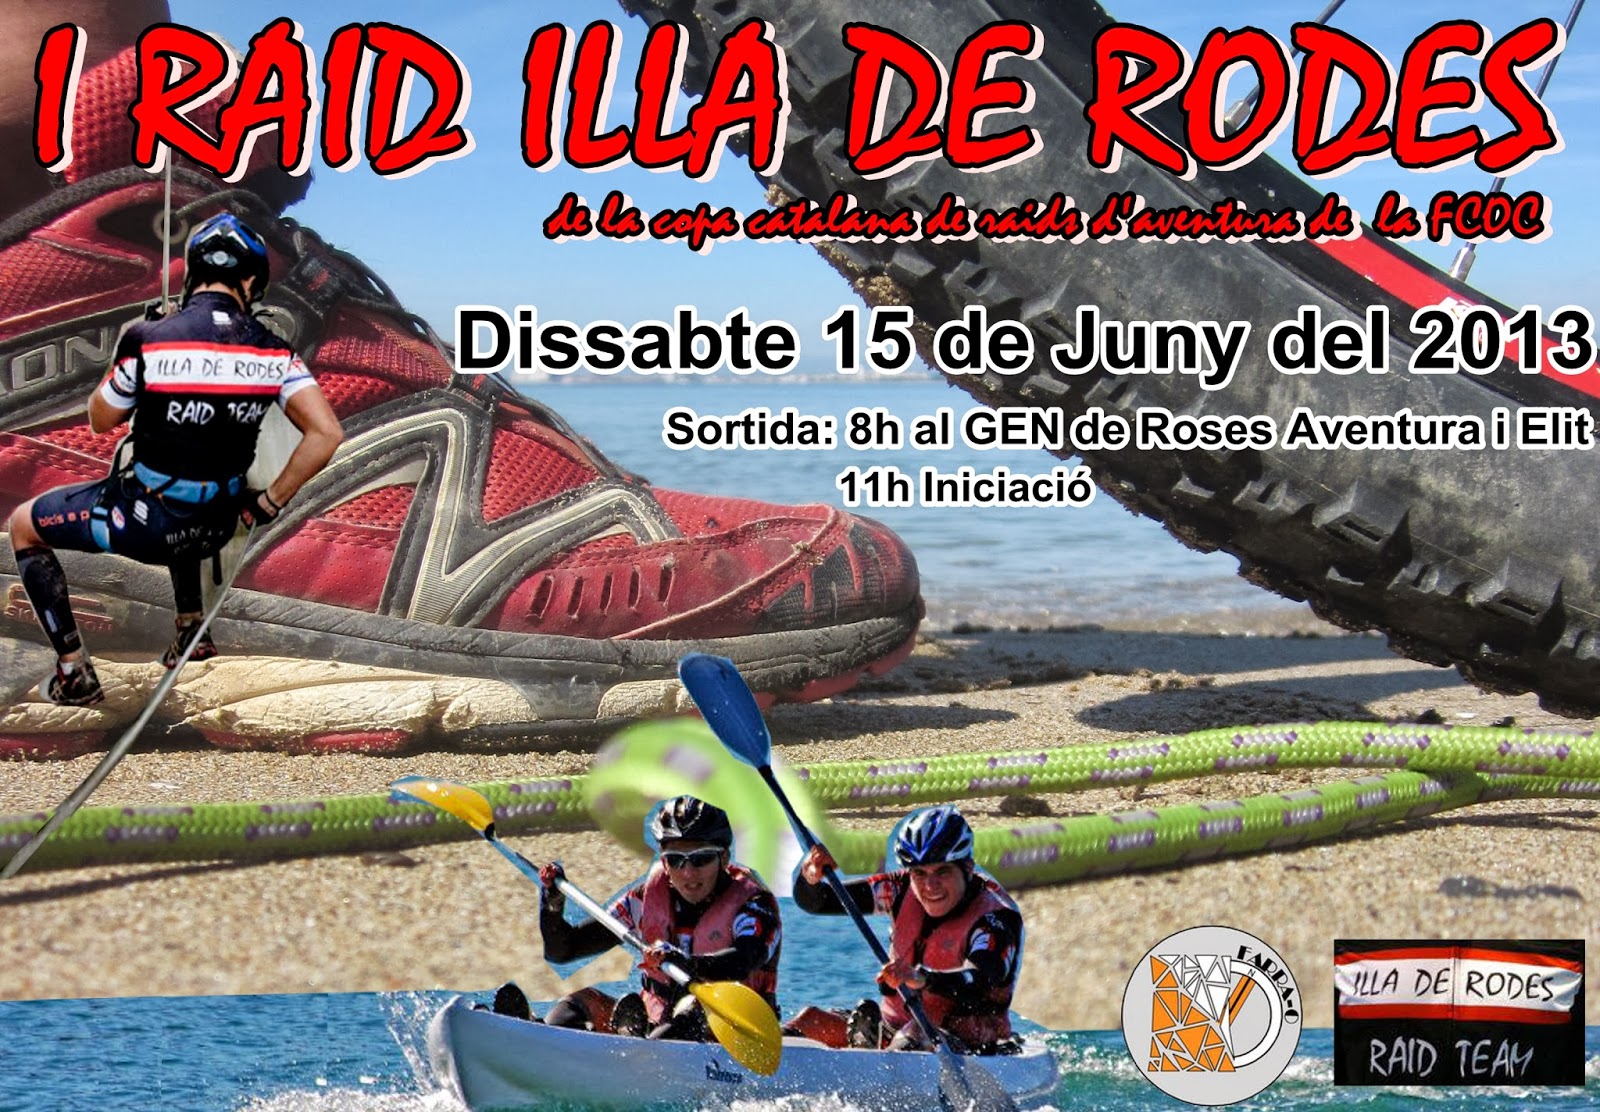 http://raidilladerodes.blogspot.com.es/